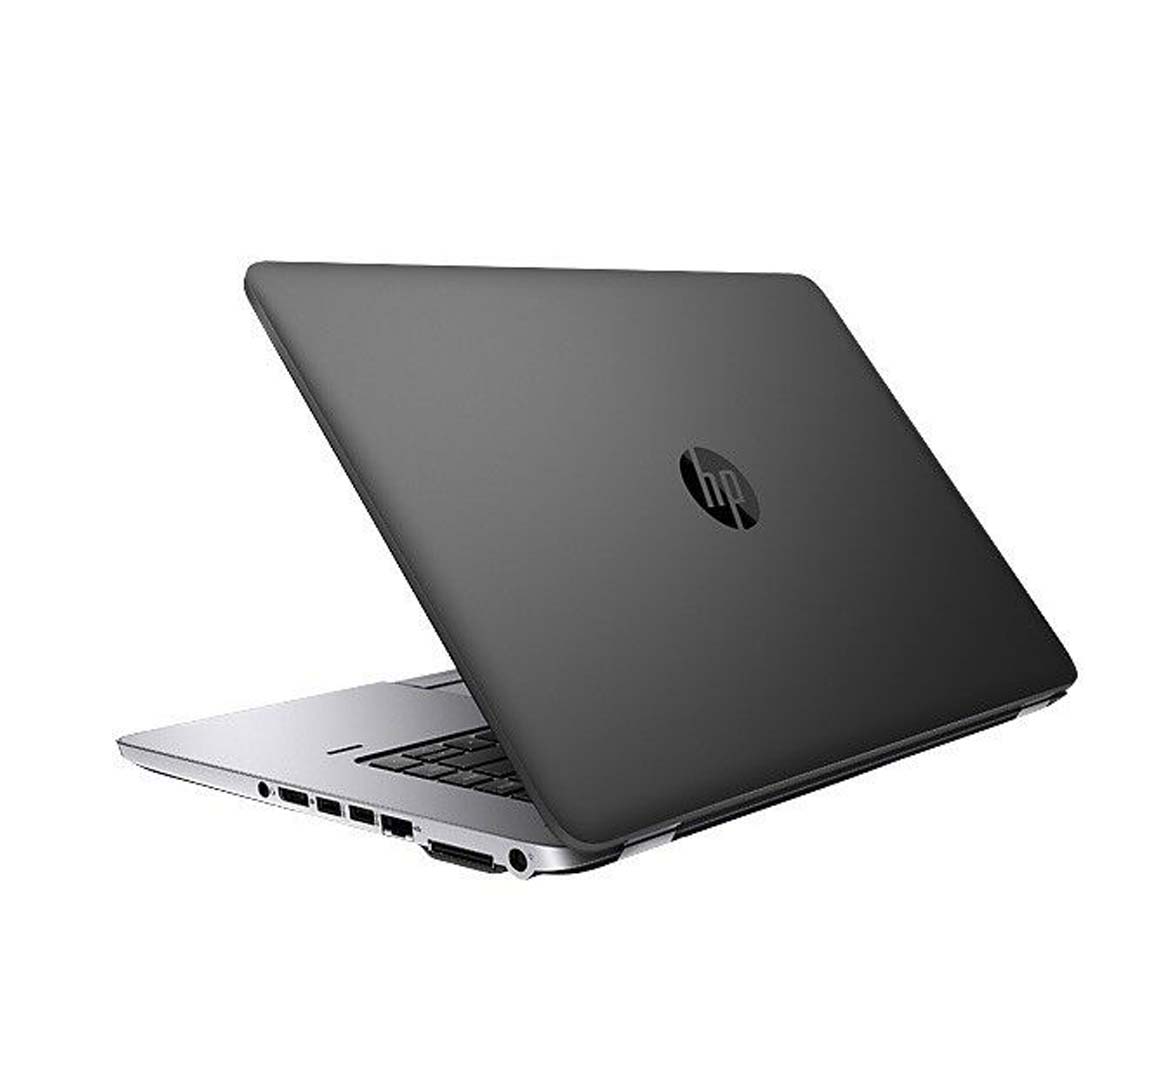 HP EliteBook 745 G2, AMD A10 Series CPU, 8GB RAM, 256GB SSD, AMD RADEON R7, 14 inch Touchscreen, Windows 10 Pro, Refurbished Laptop